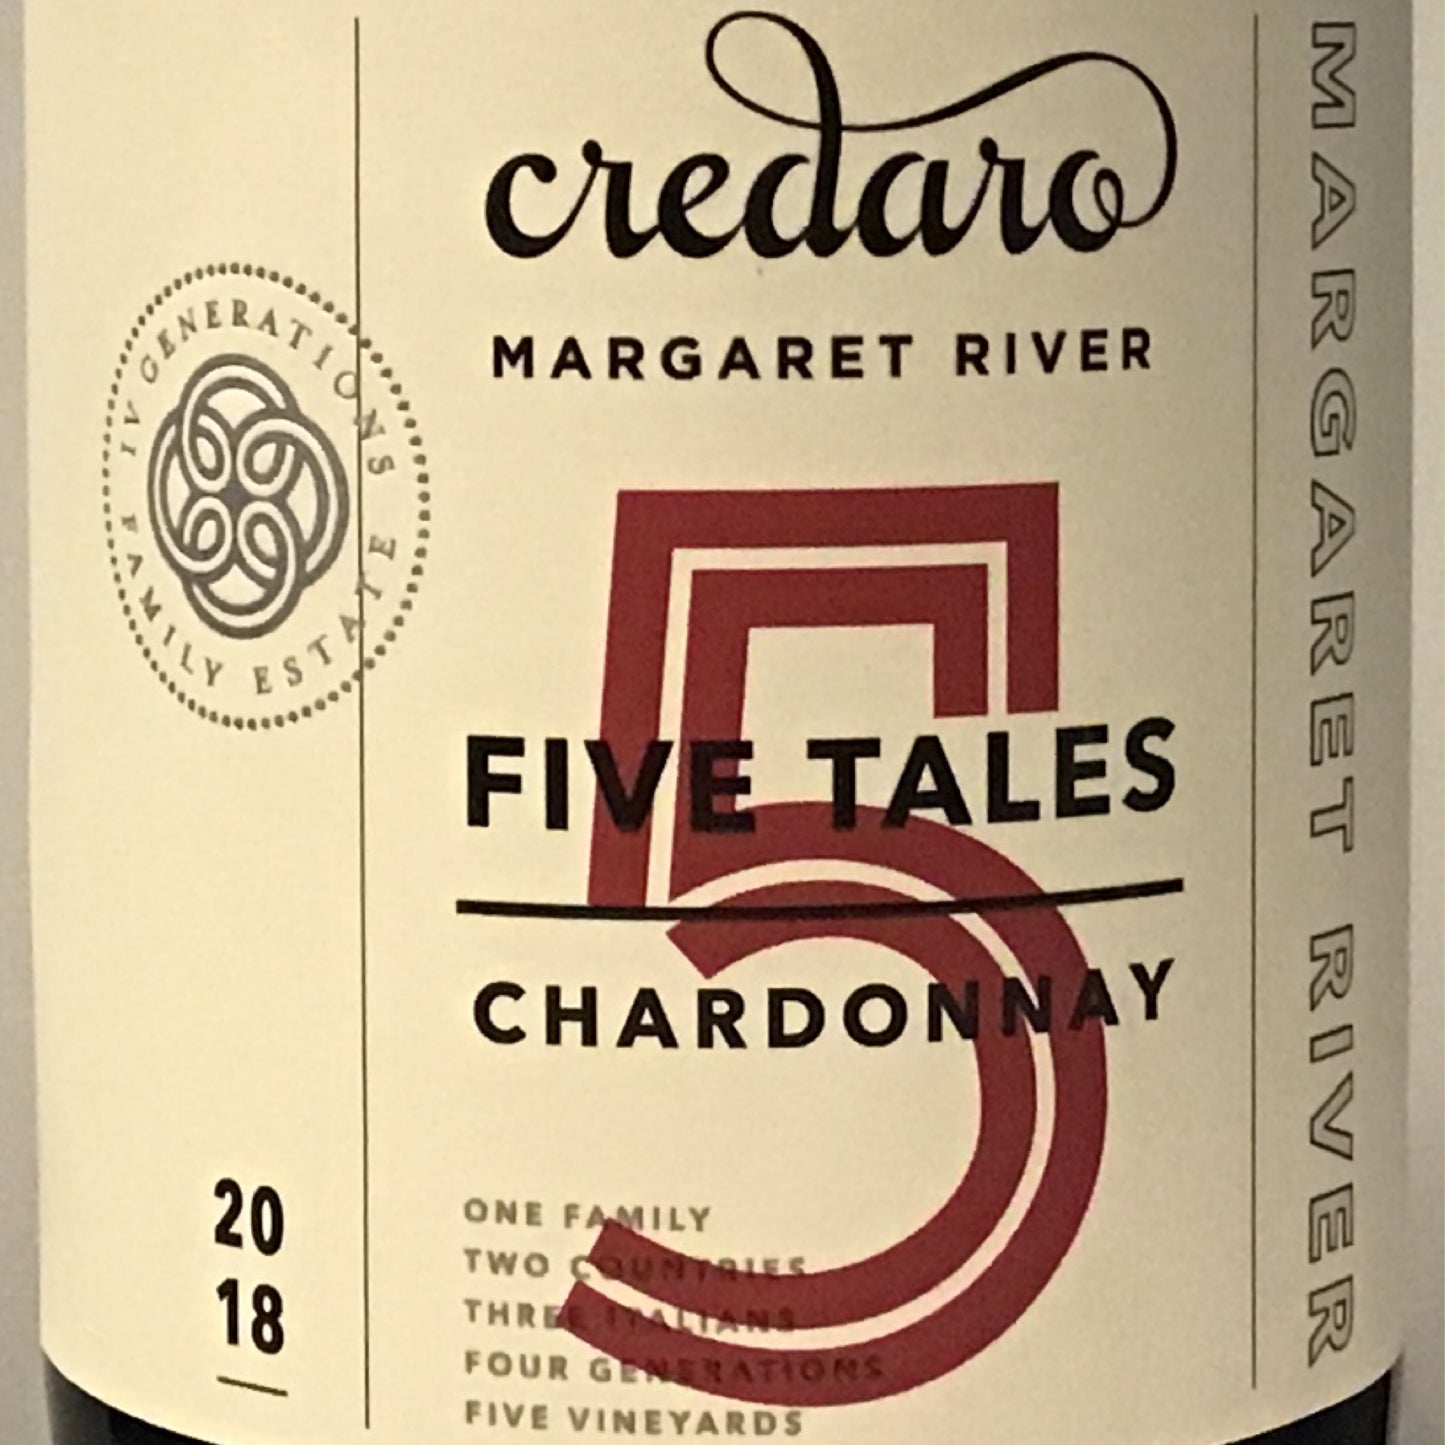 Credaro 'Five Tales' - Chardonnay